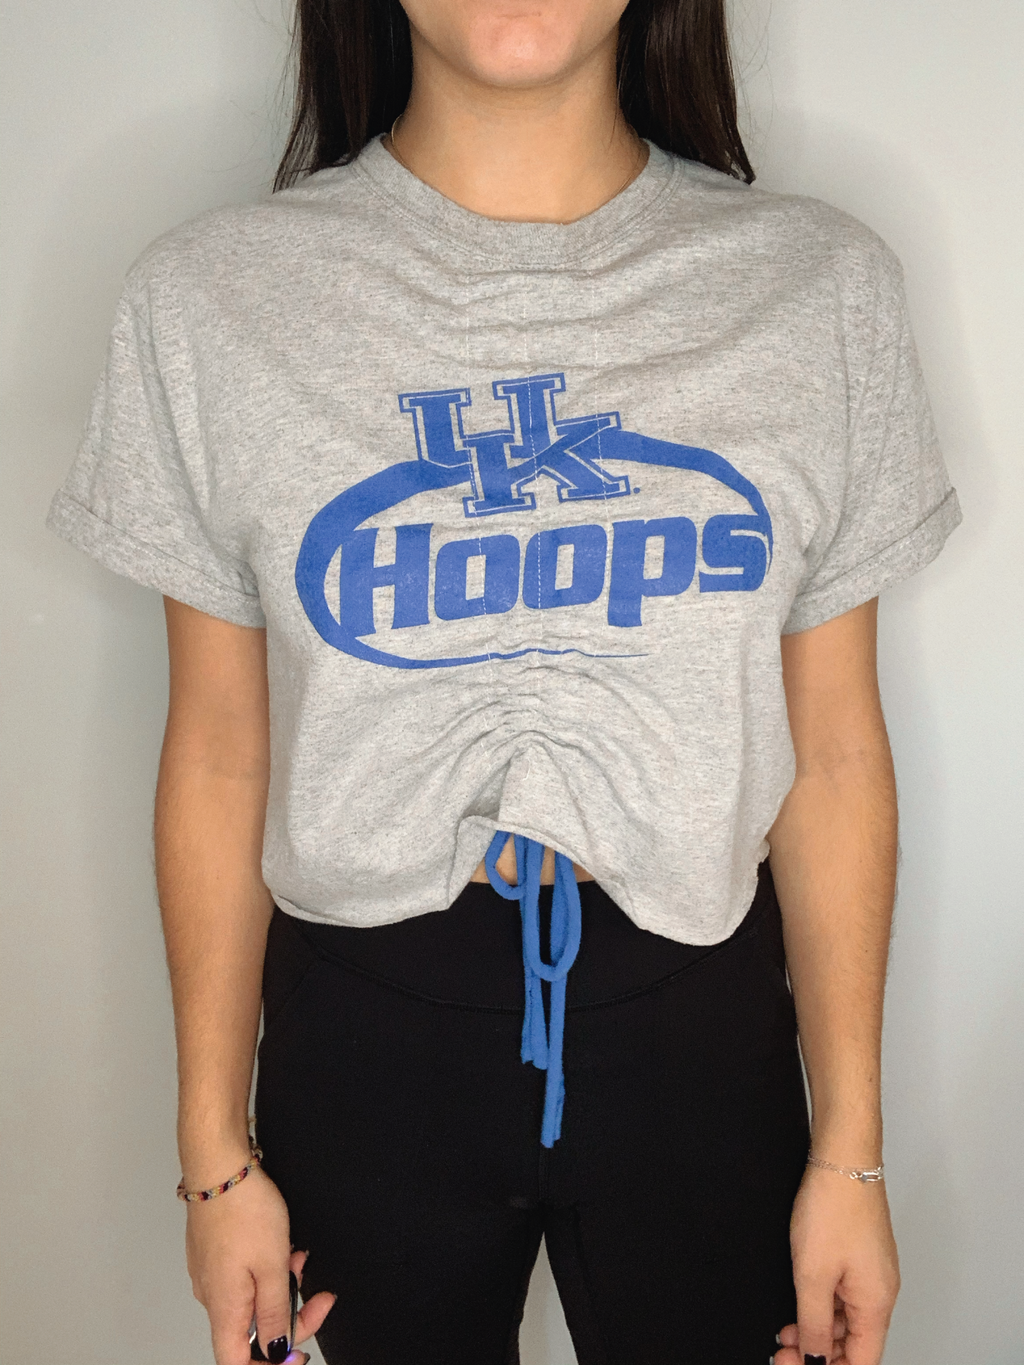 University of Kentucky Basketball Cinched Middle Shirt